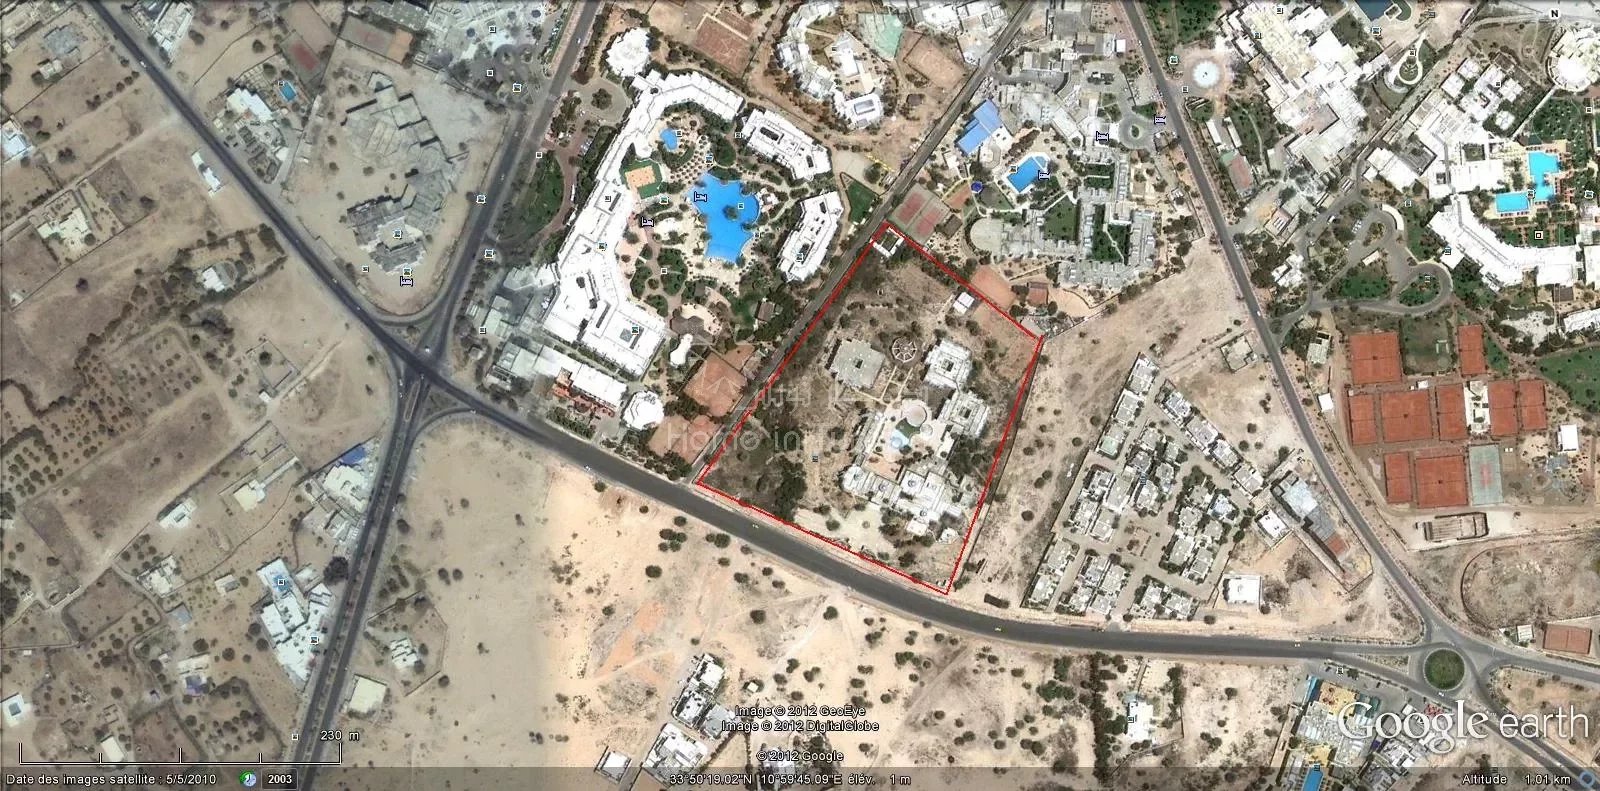 Hotel 4 étoiles avec 2 piscines à Djerba